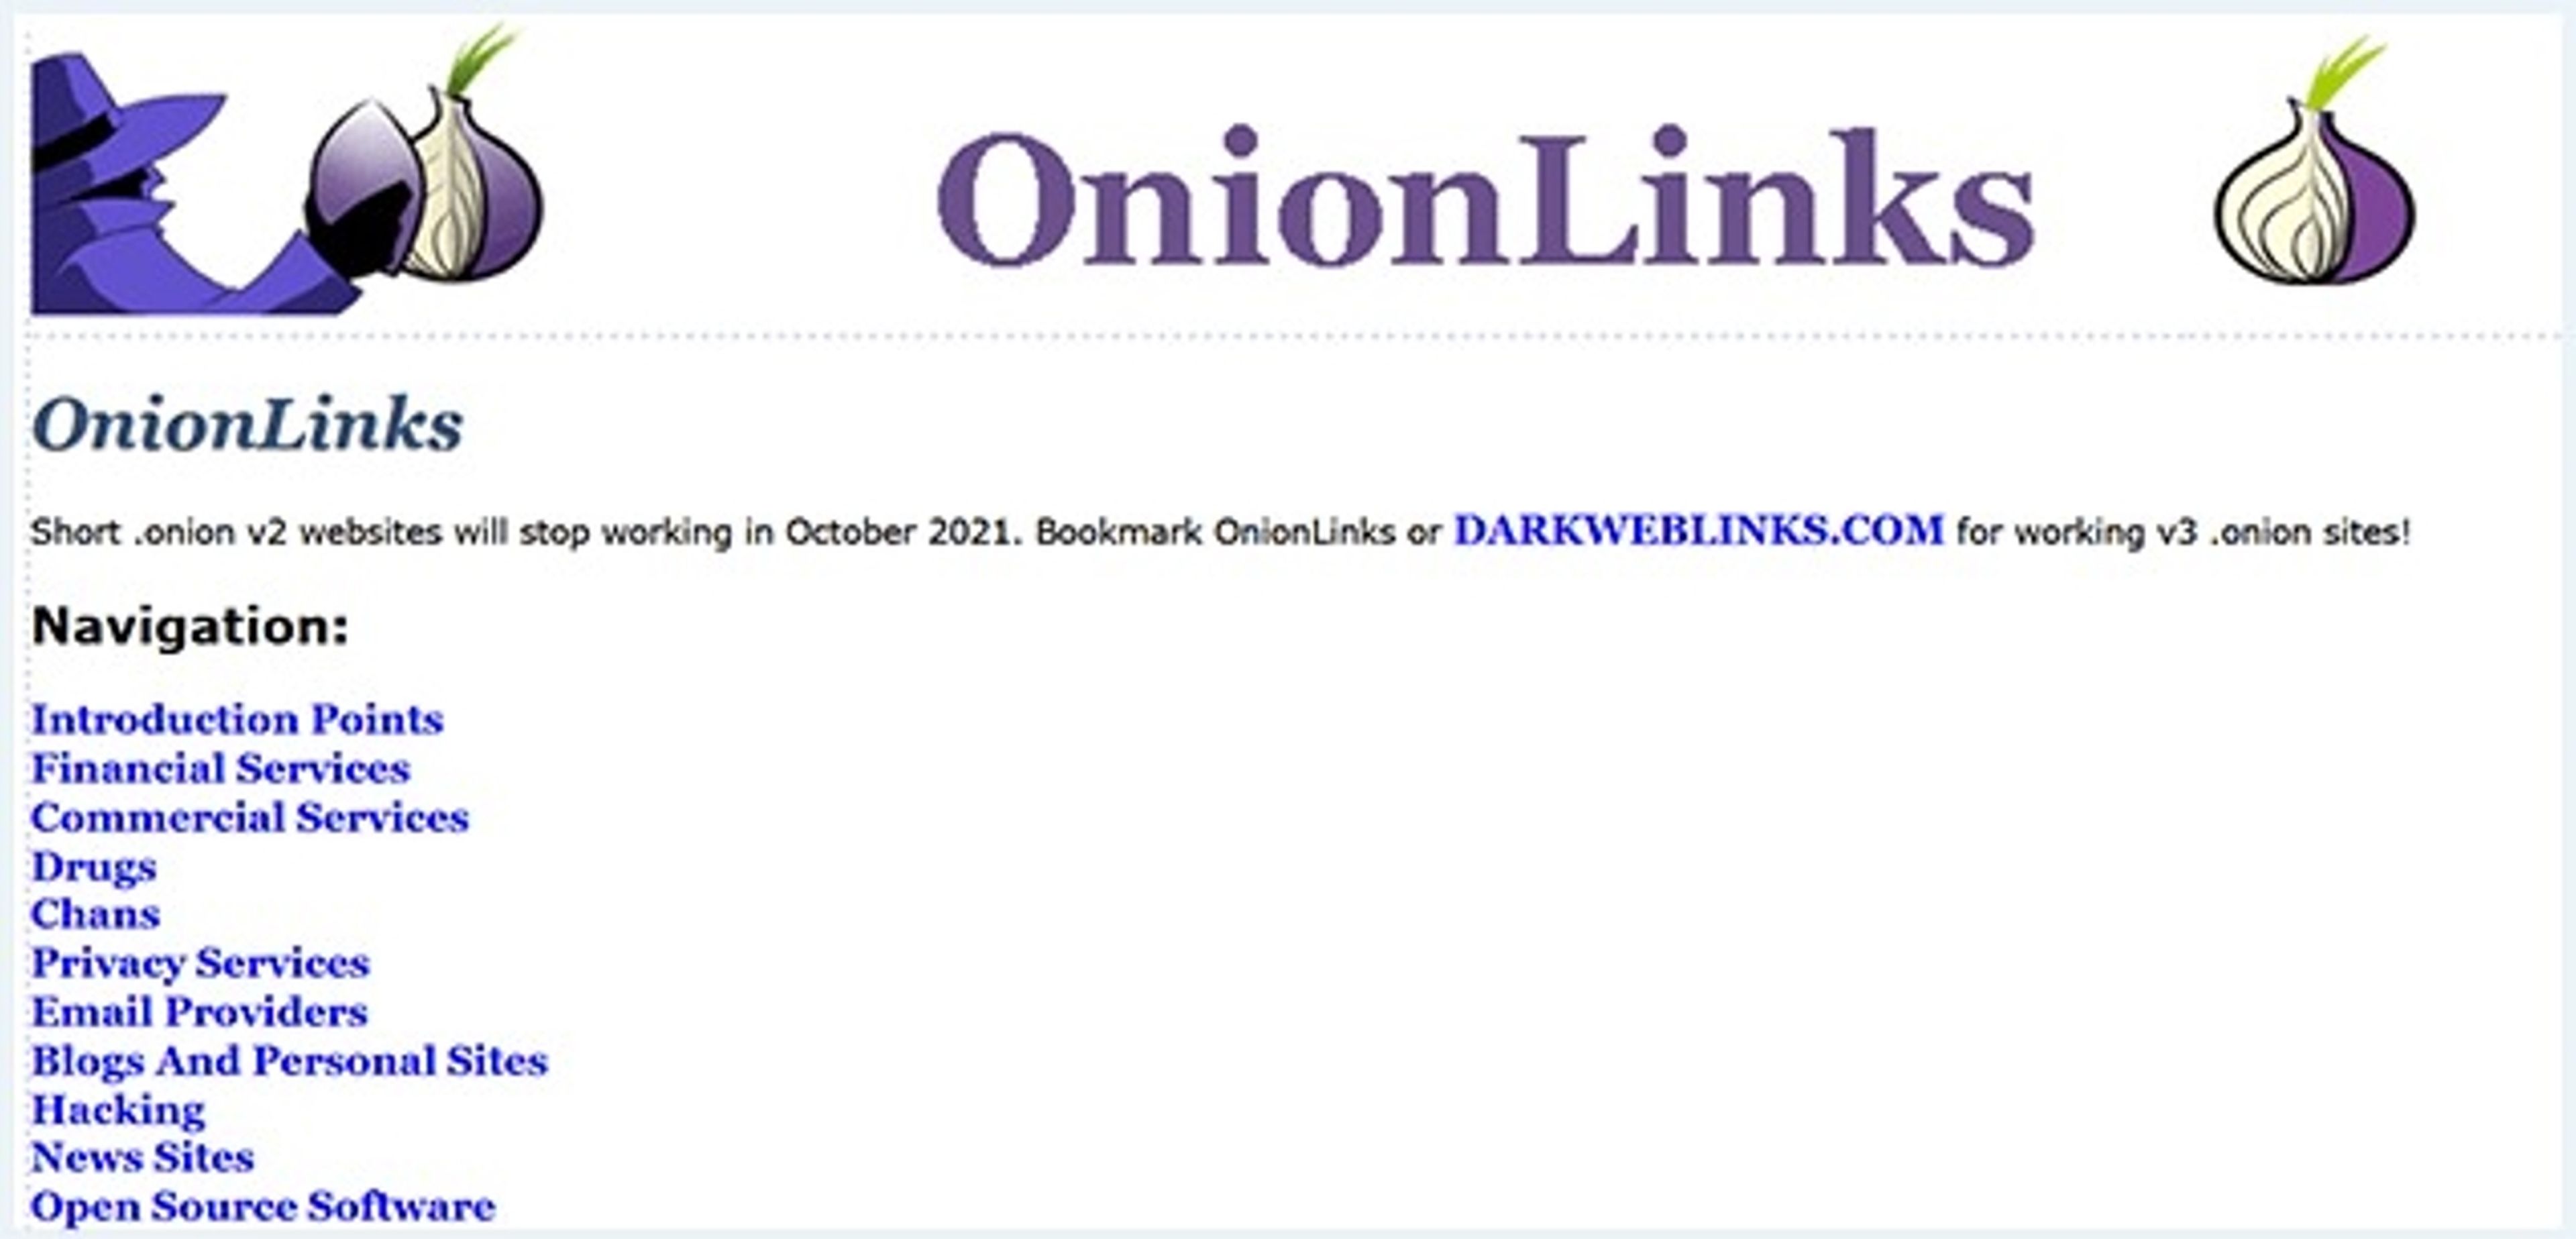 Onionlinks